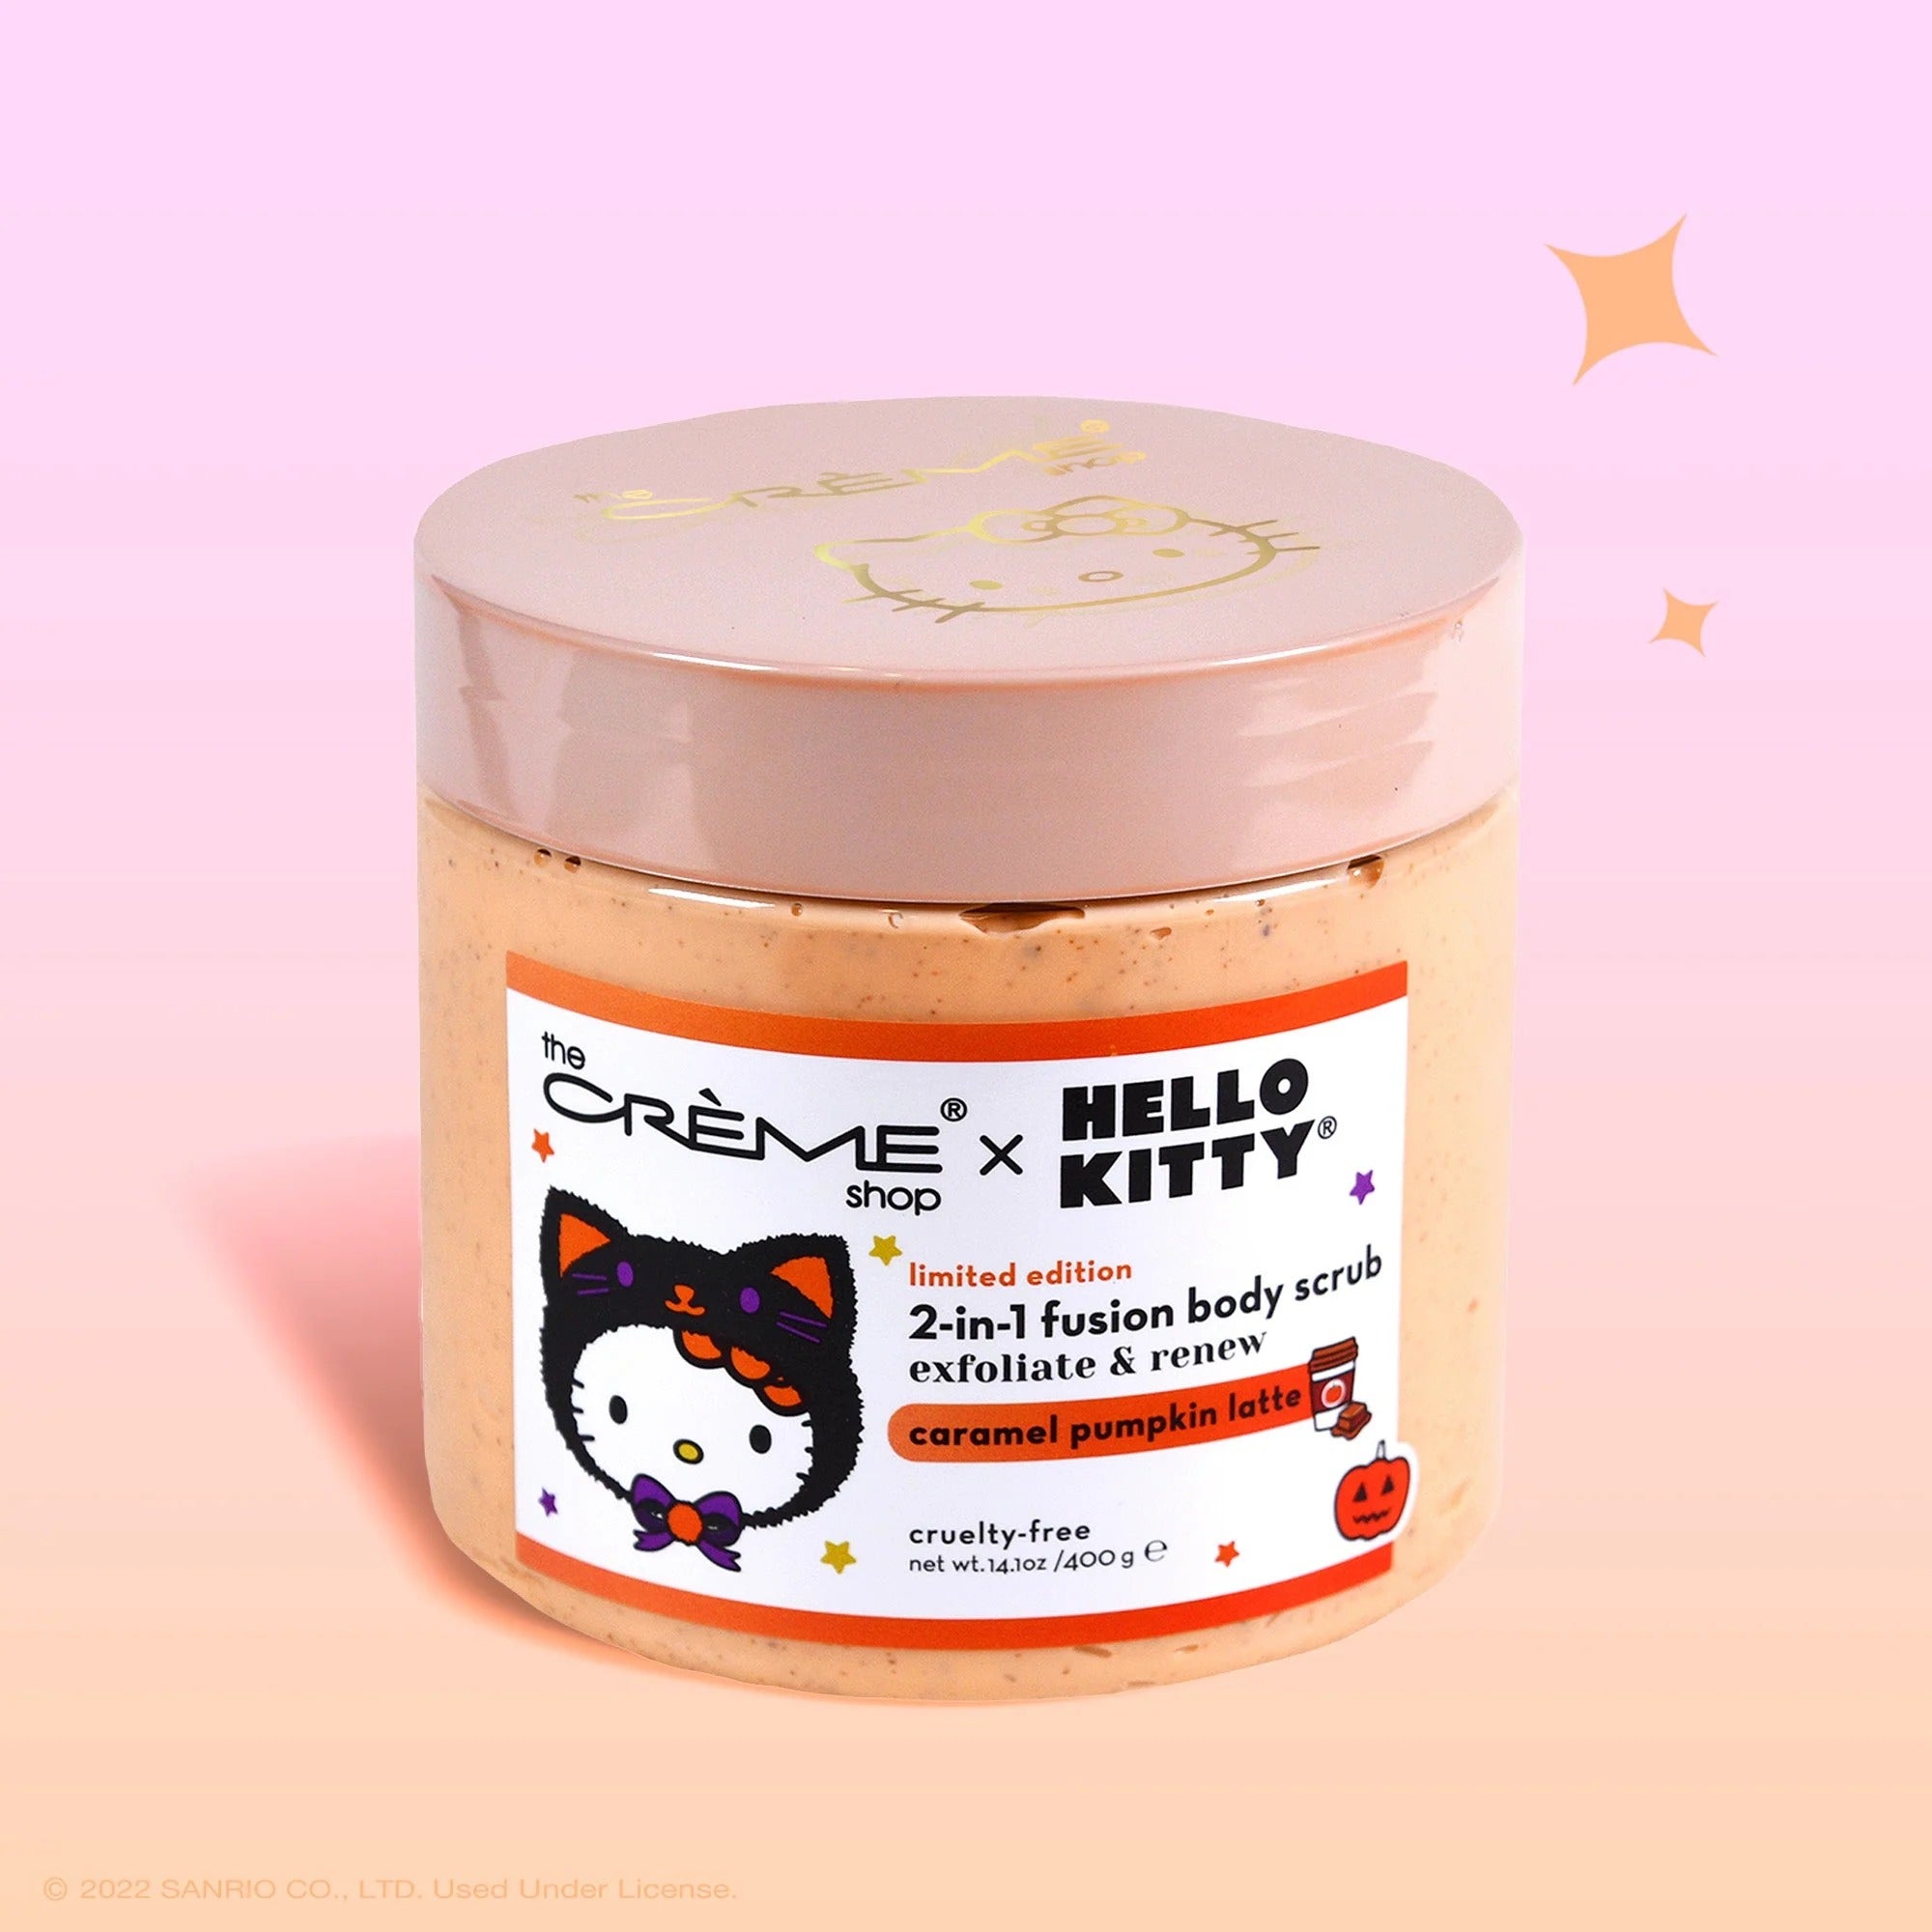 Hello Kitty x The Crème Shop Fusion Body Scrub (Caramel Pumpkin Latte) Beauty The Crème Shop   